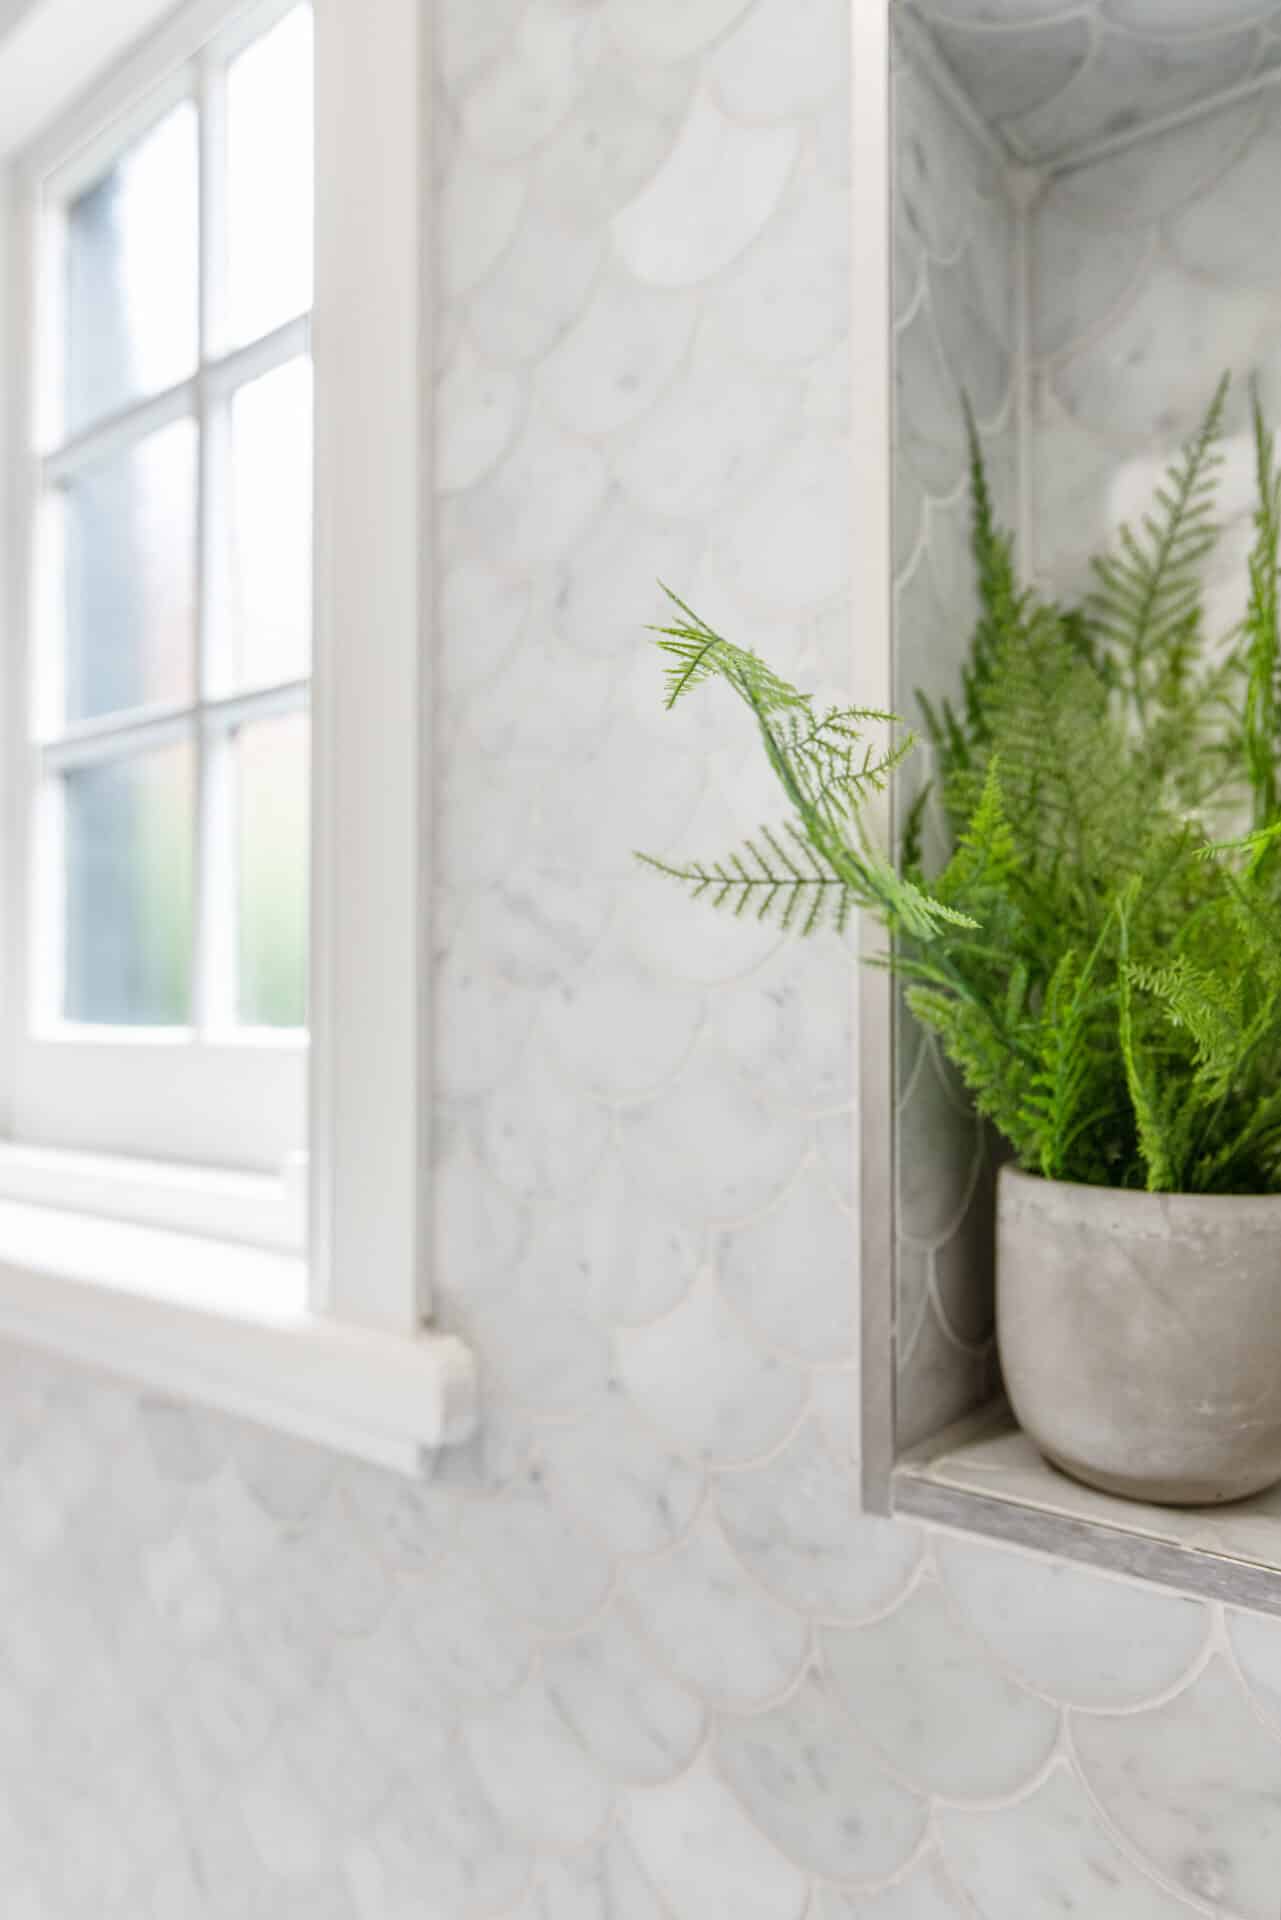 a window with a shelf and a plant